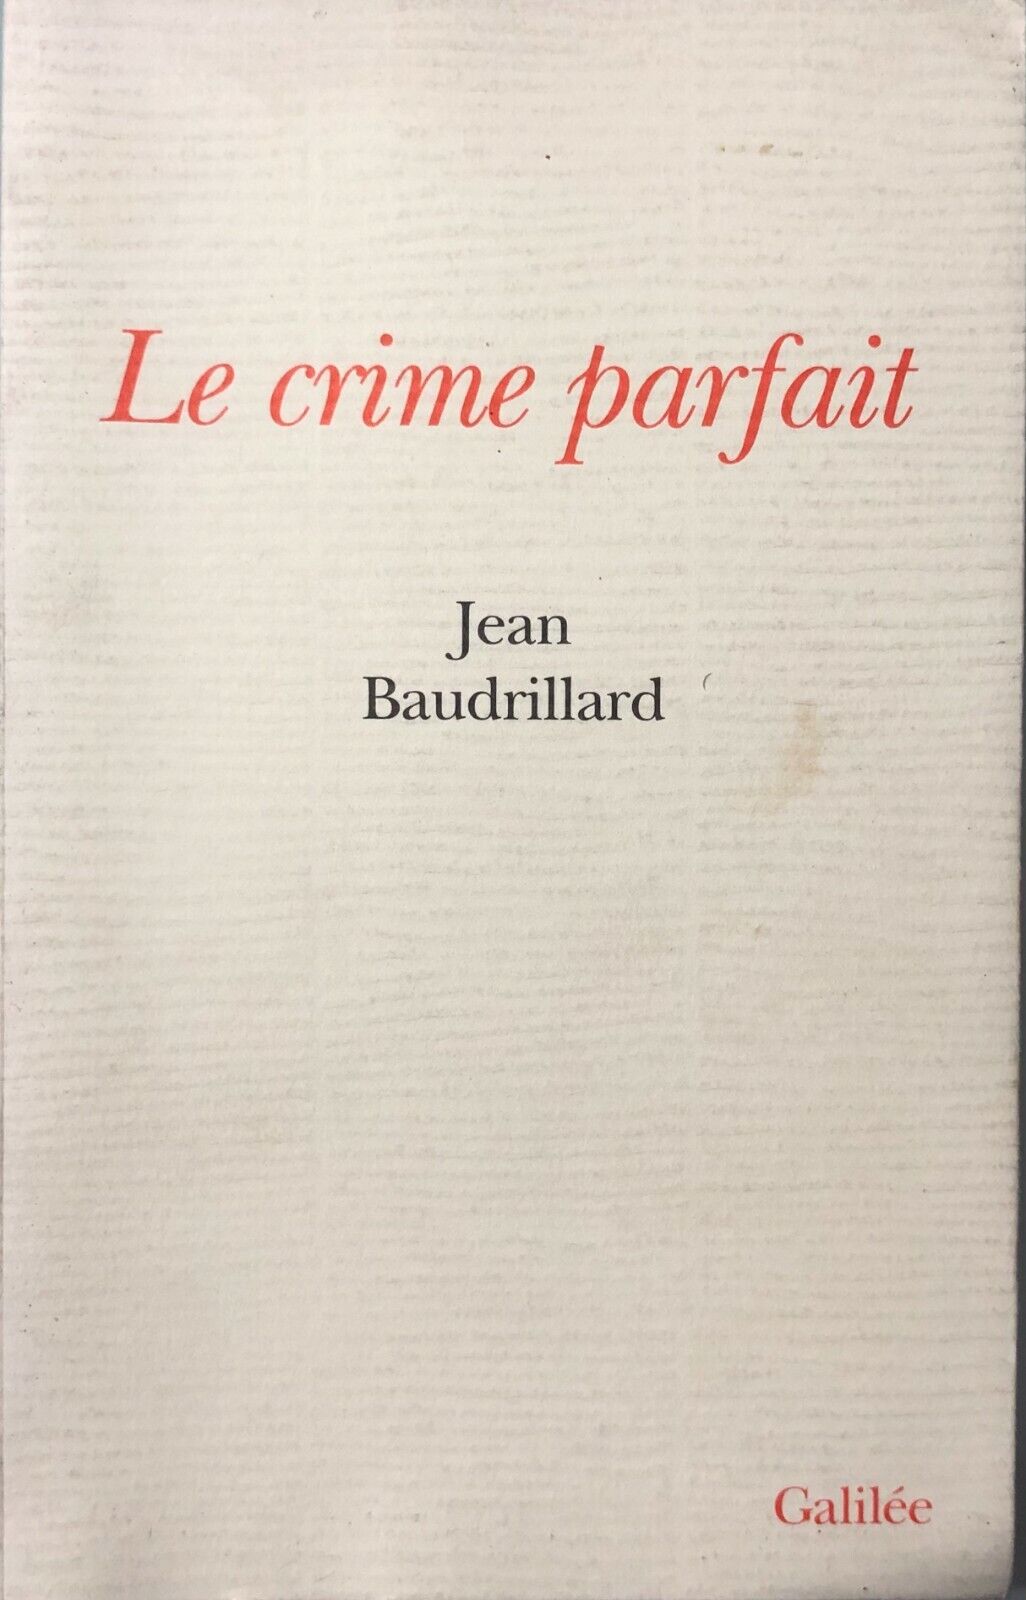 Le crime parfait, Jean Baudrillard, Galil?e